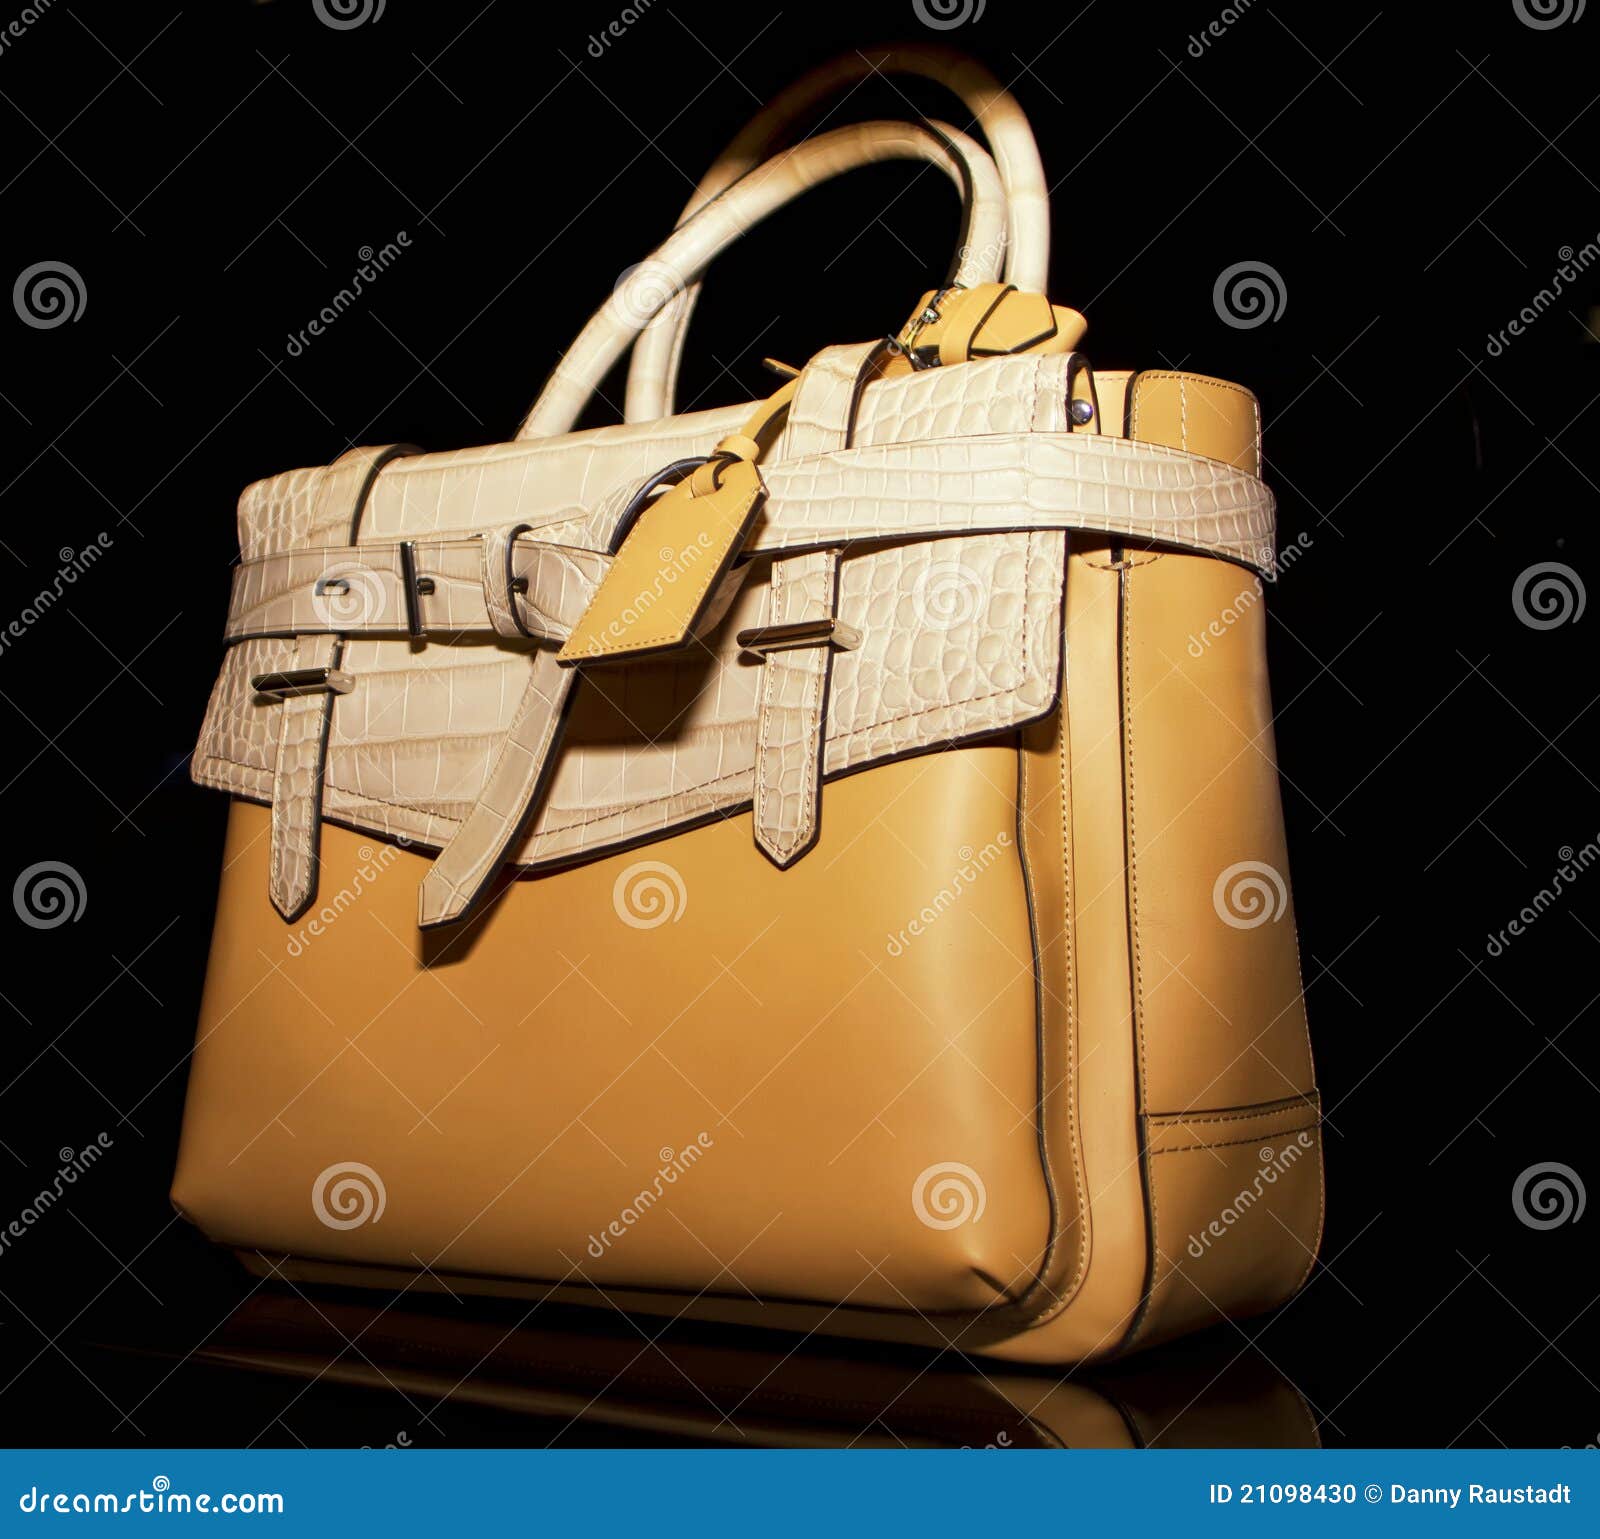 women's stylish leather purse boutique